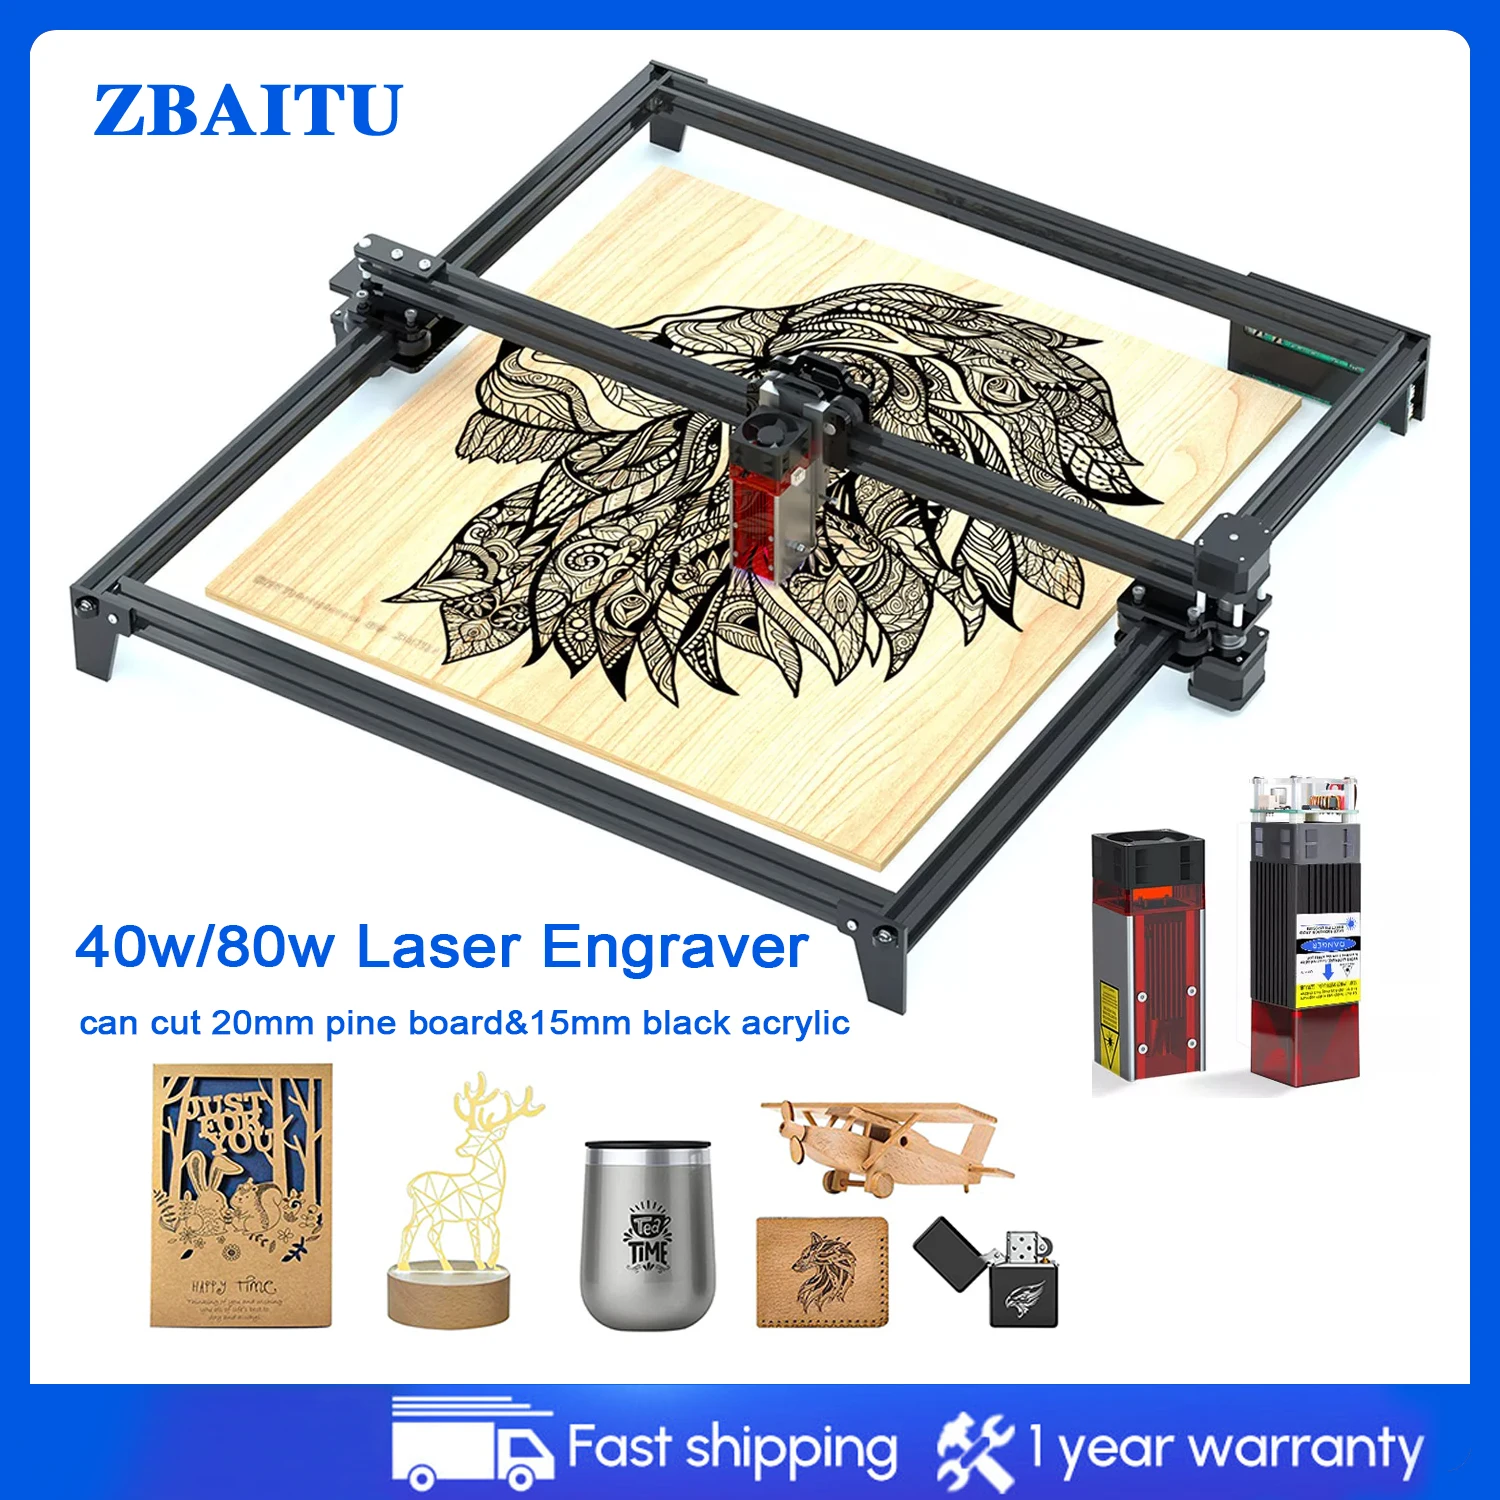 ZBAITU Woodworking Laser Engraver 80W Laser Module CNC DIY Wood Engraving Cutting Machine Wifi Cellphone Control Air Assisted